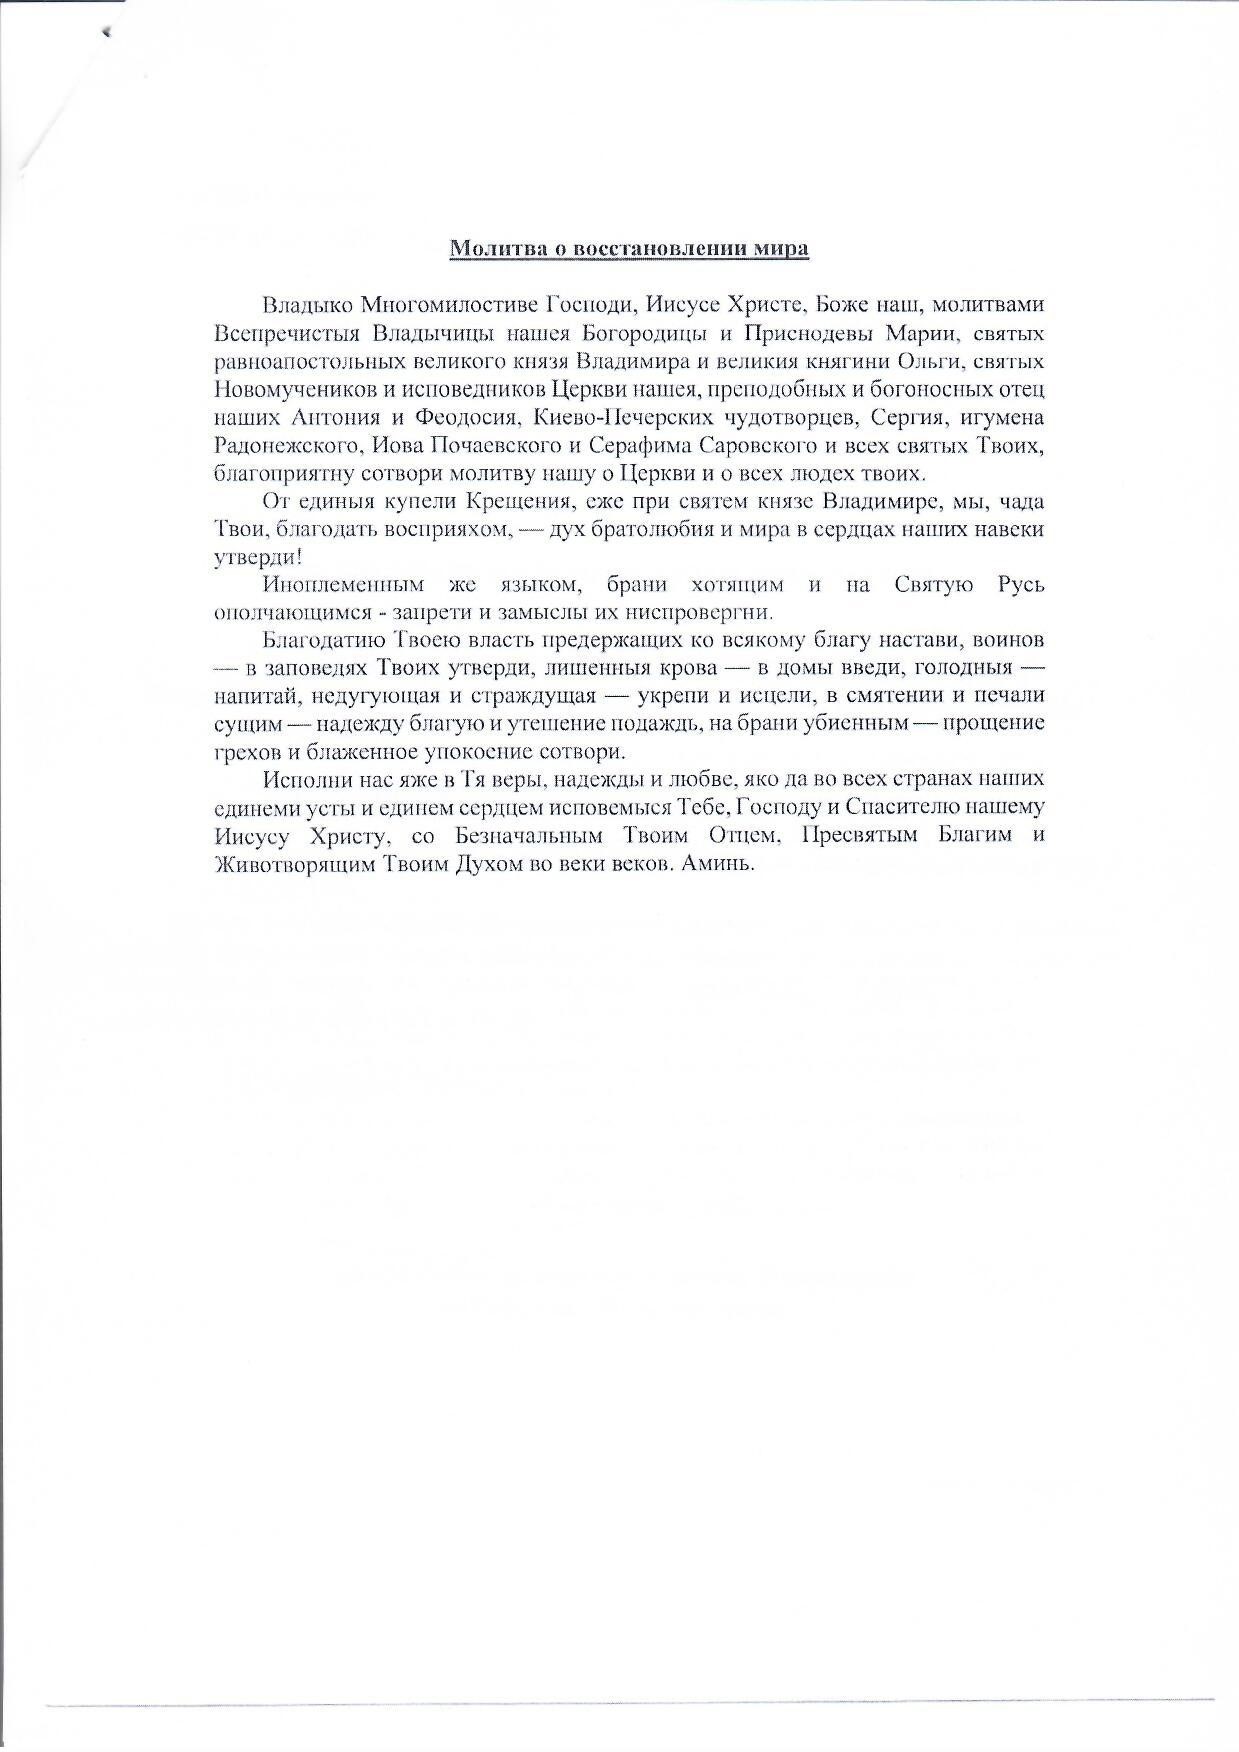 Обращение Святейшего Патриарха Кирилла от 16 марта 2022 года в связи с событиями на Украине (текст молитвы)